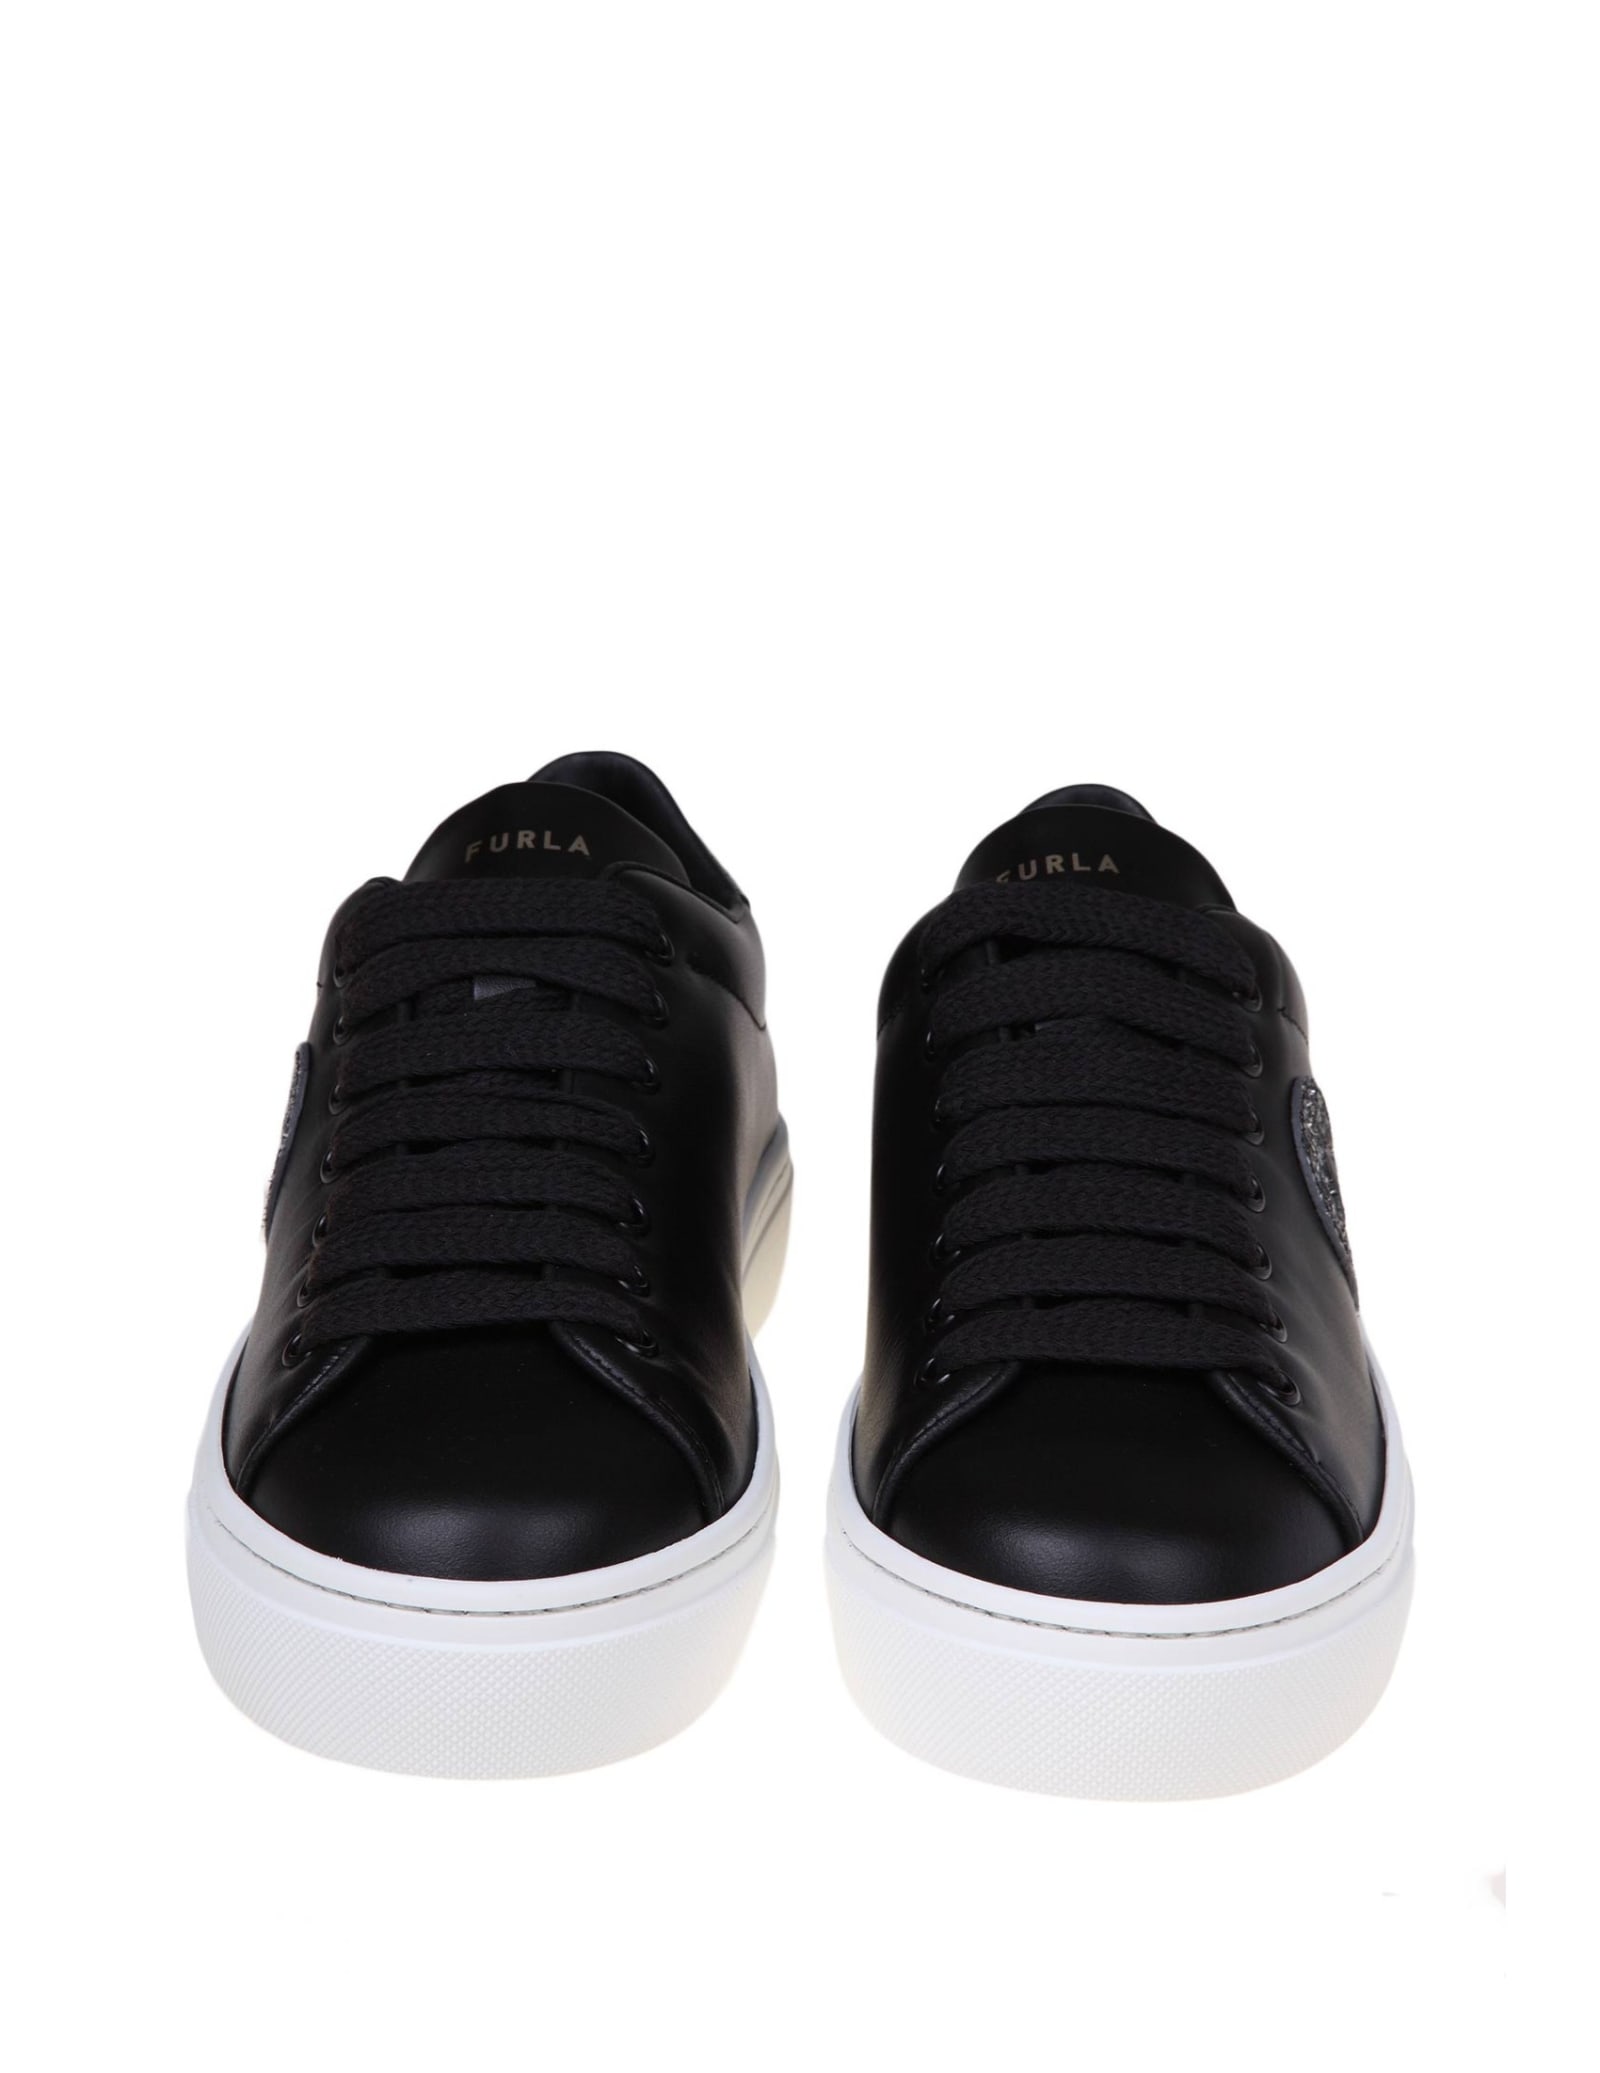 Shop Furla Joy Lace Up Sneakers In Black Leather